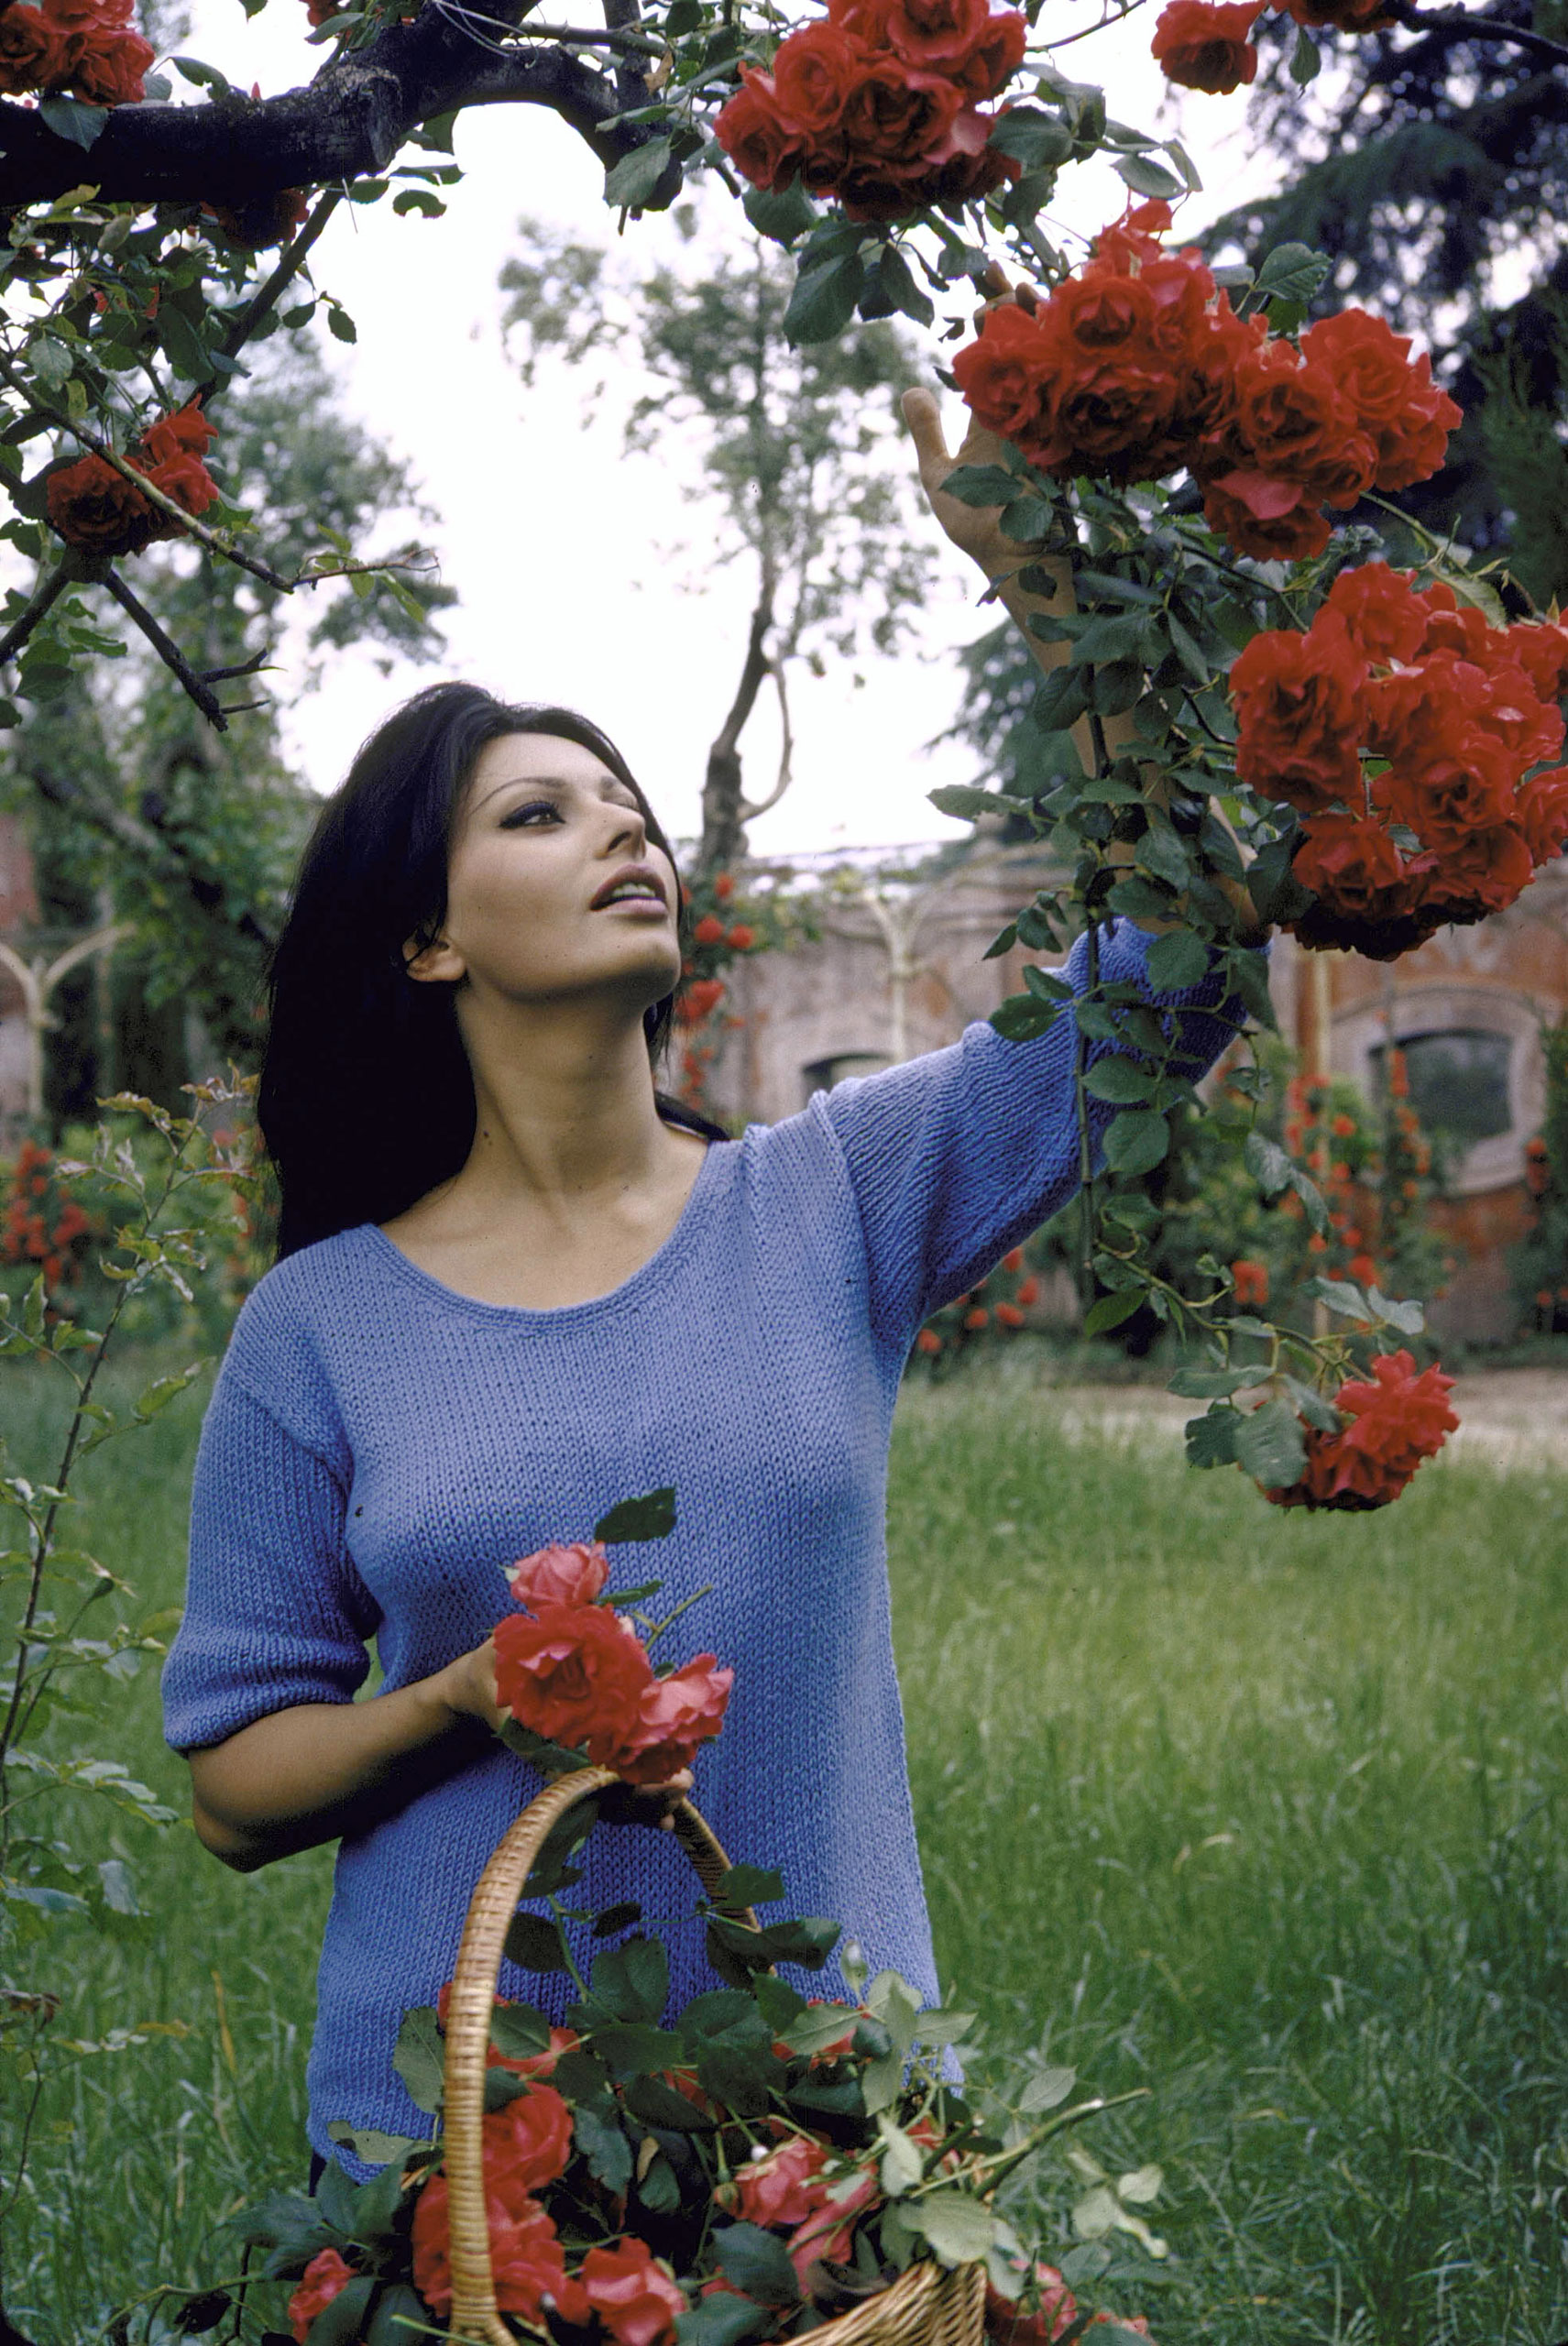 Sophia Loren picks roses at her Italian villa, 1964.